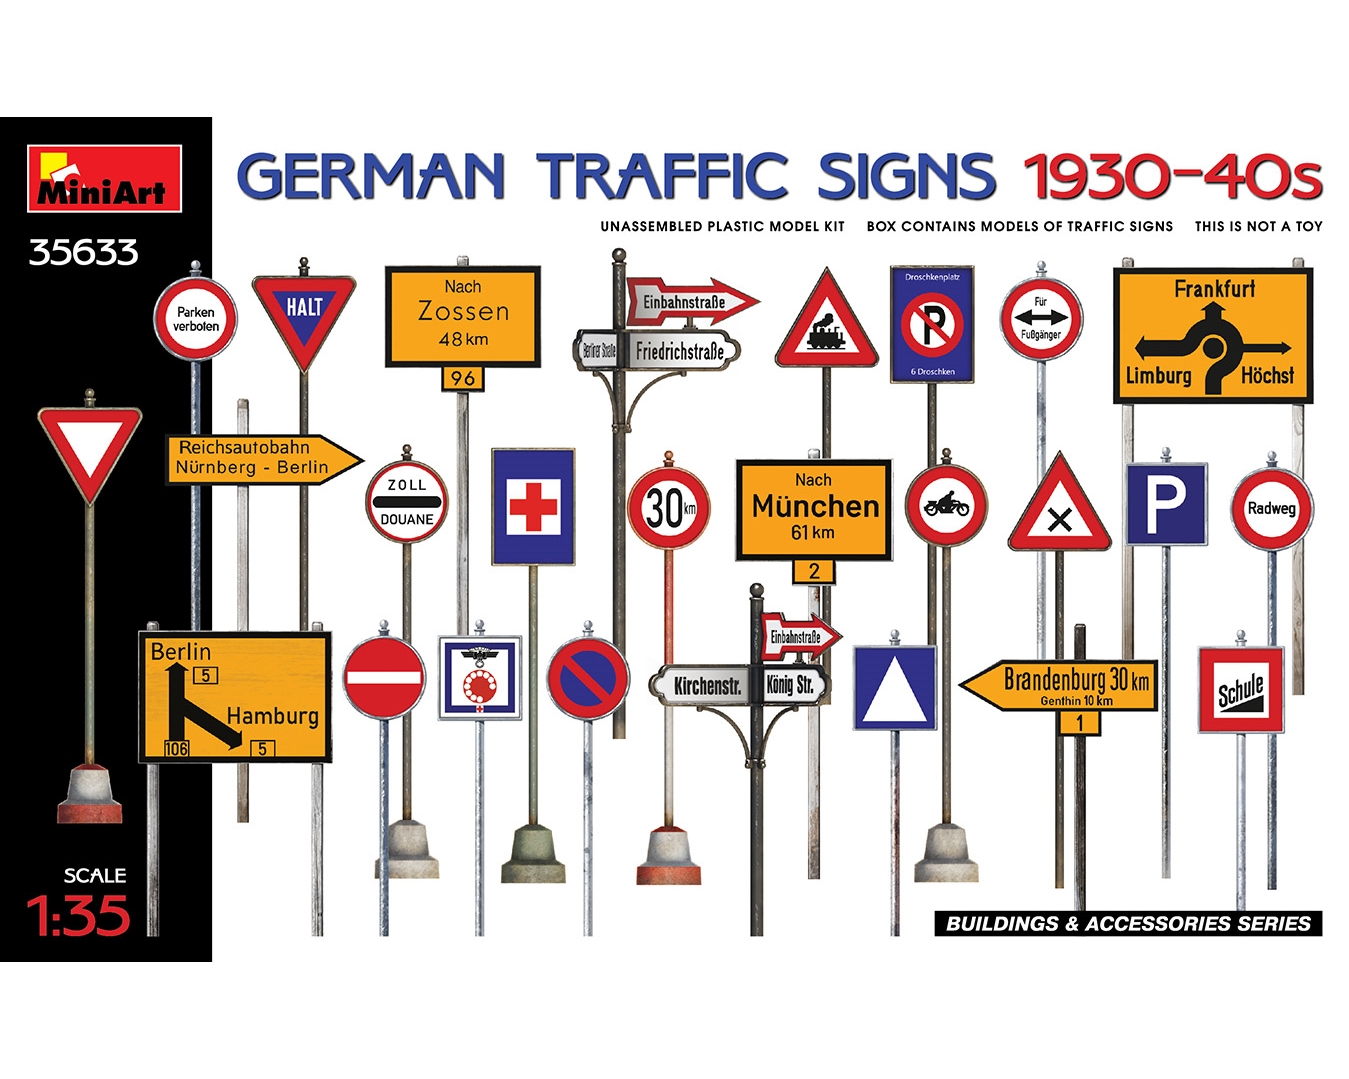 GERMAN TRAFFIC SIGNS 1930-40S